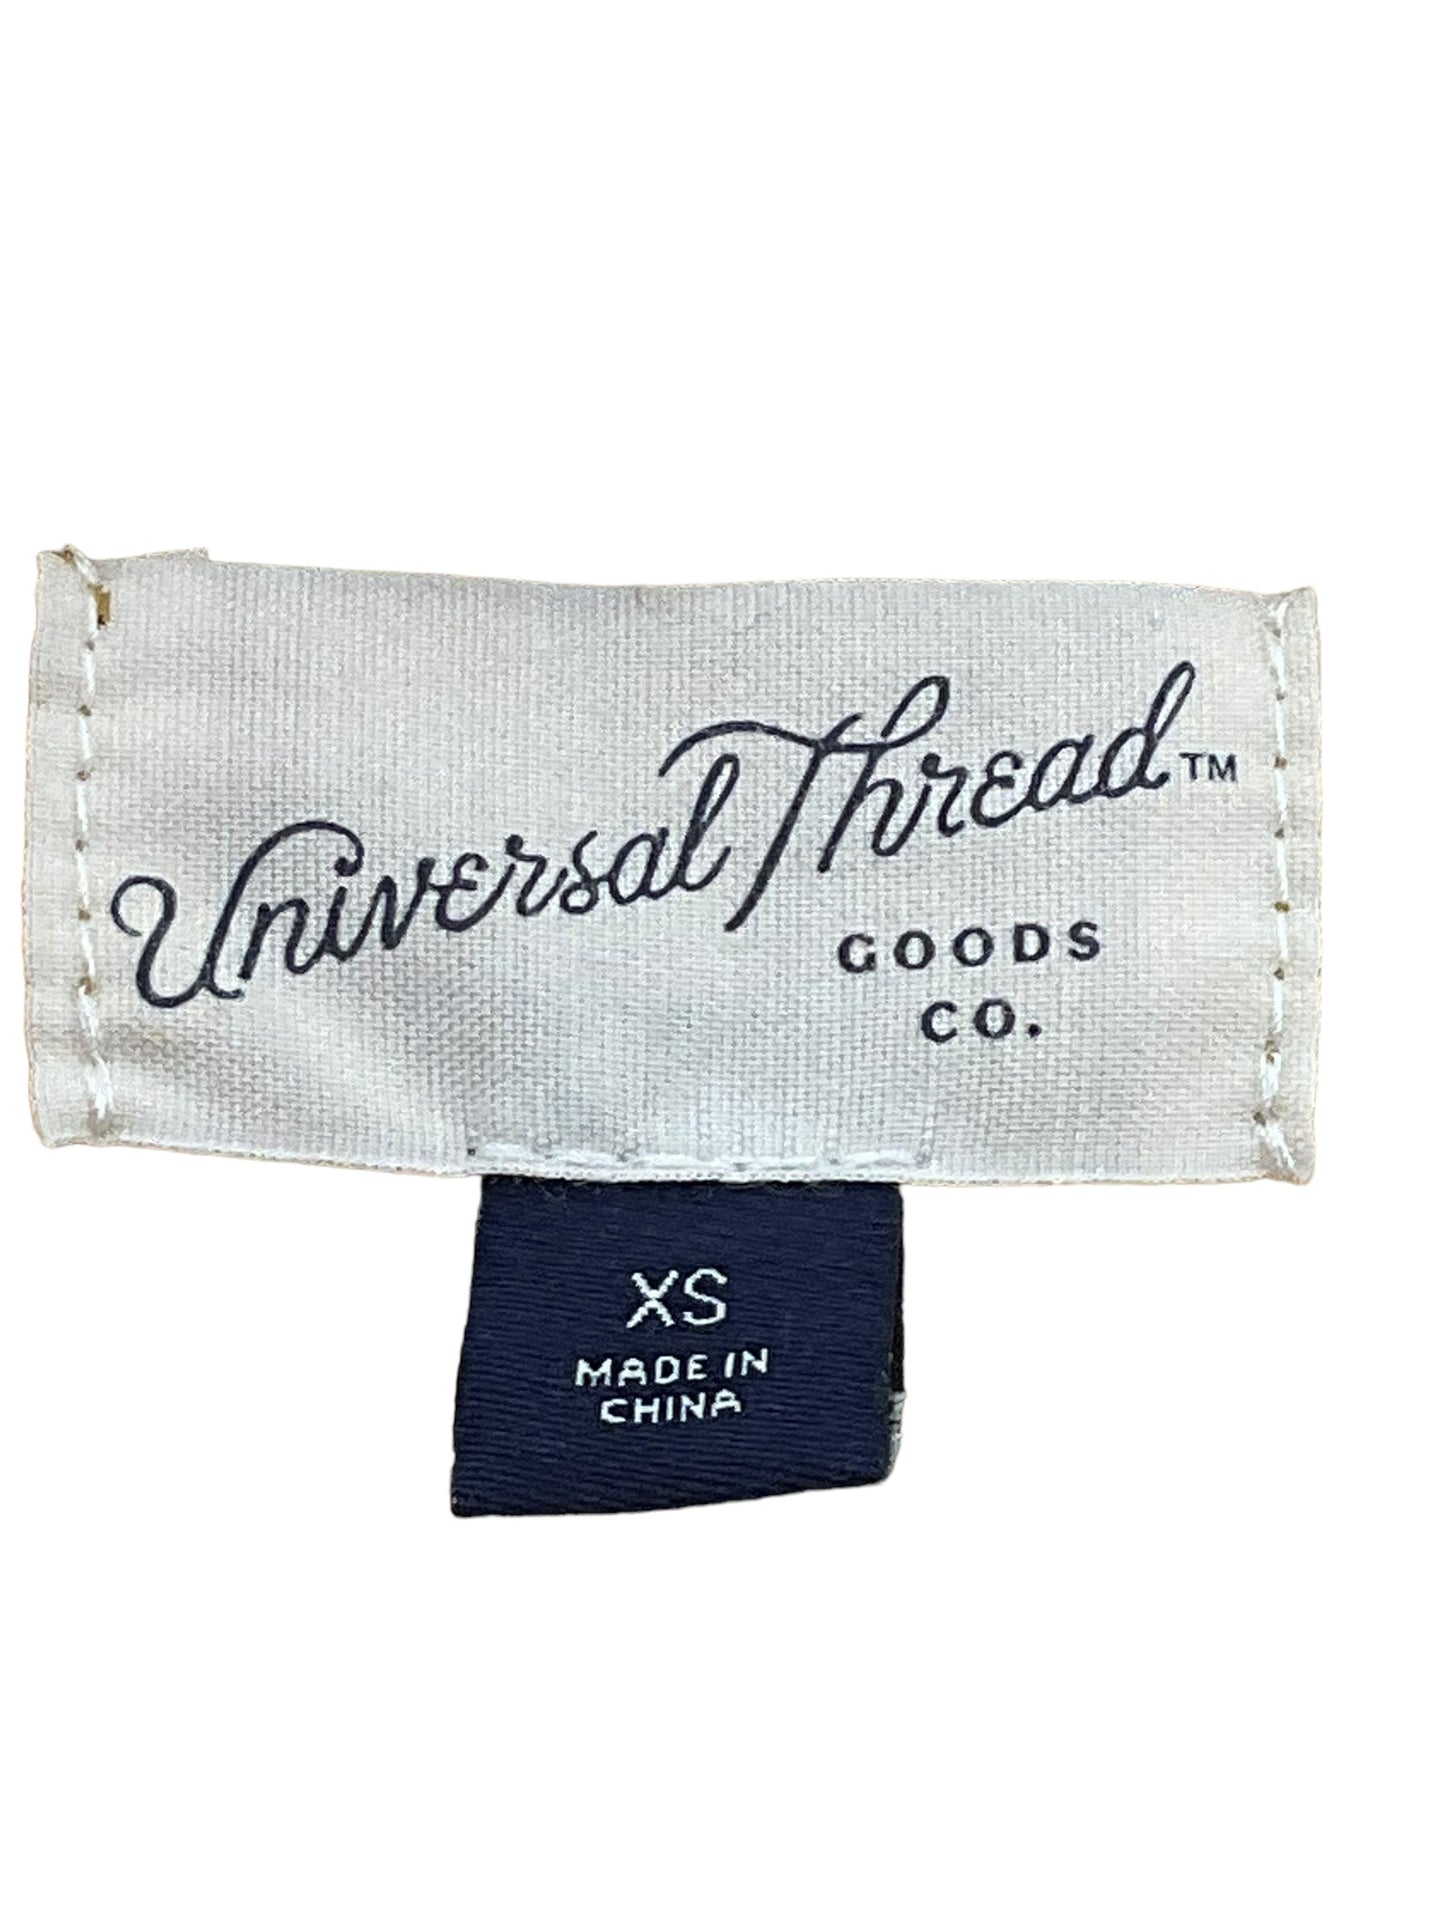 Gold Sweater Cardigan Universal Thread, Size Xs